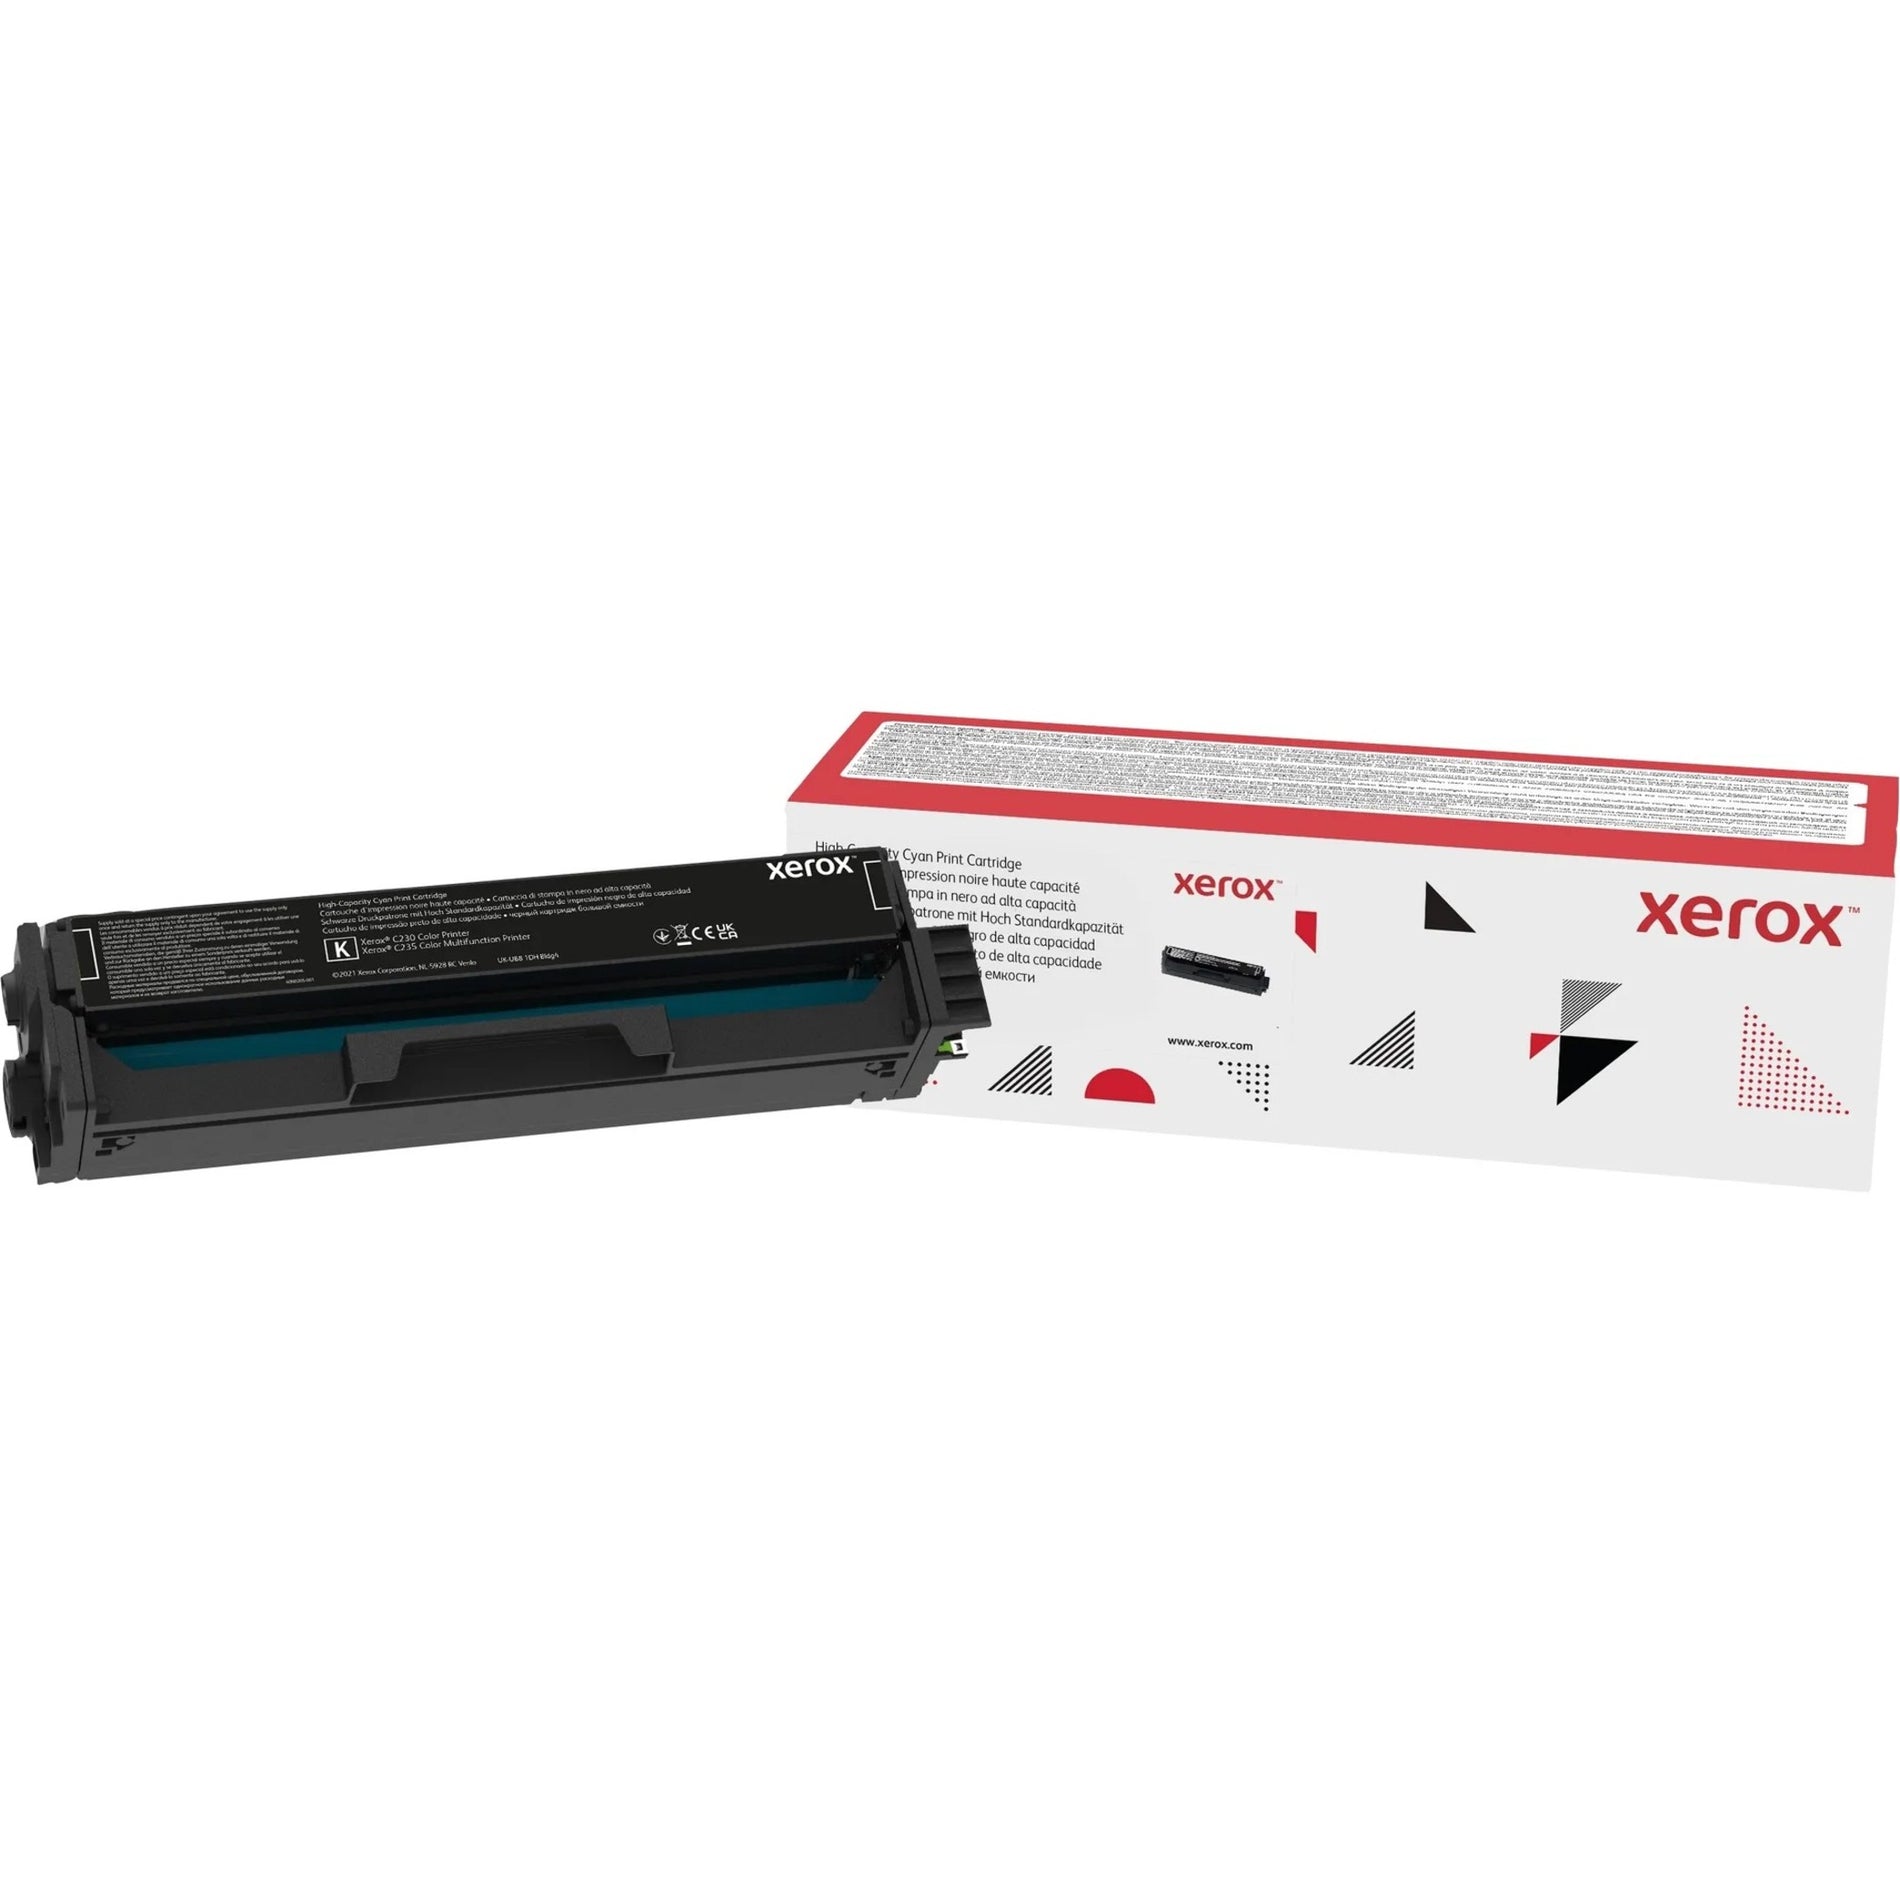 Xerox 006R04391 C230 / C235 Black High Capacity Toner Cartridge (3,000 pages), Original